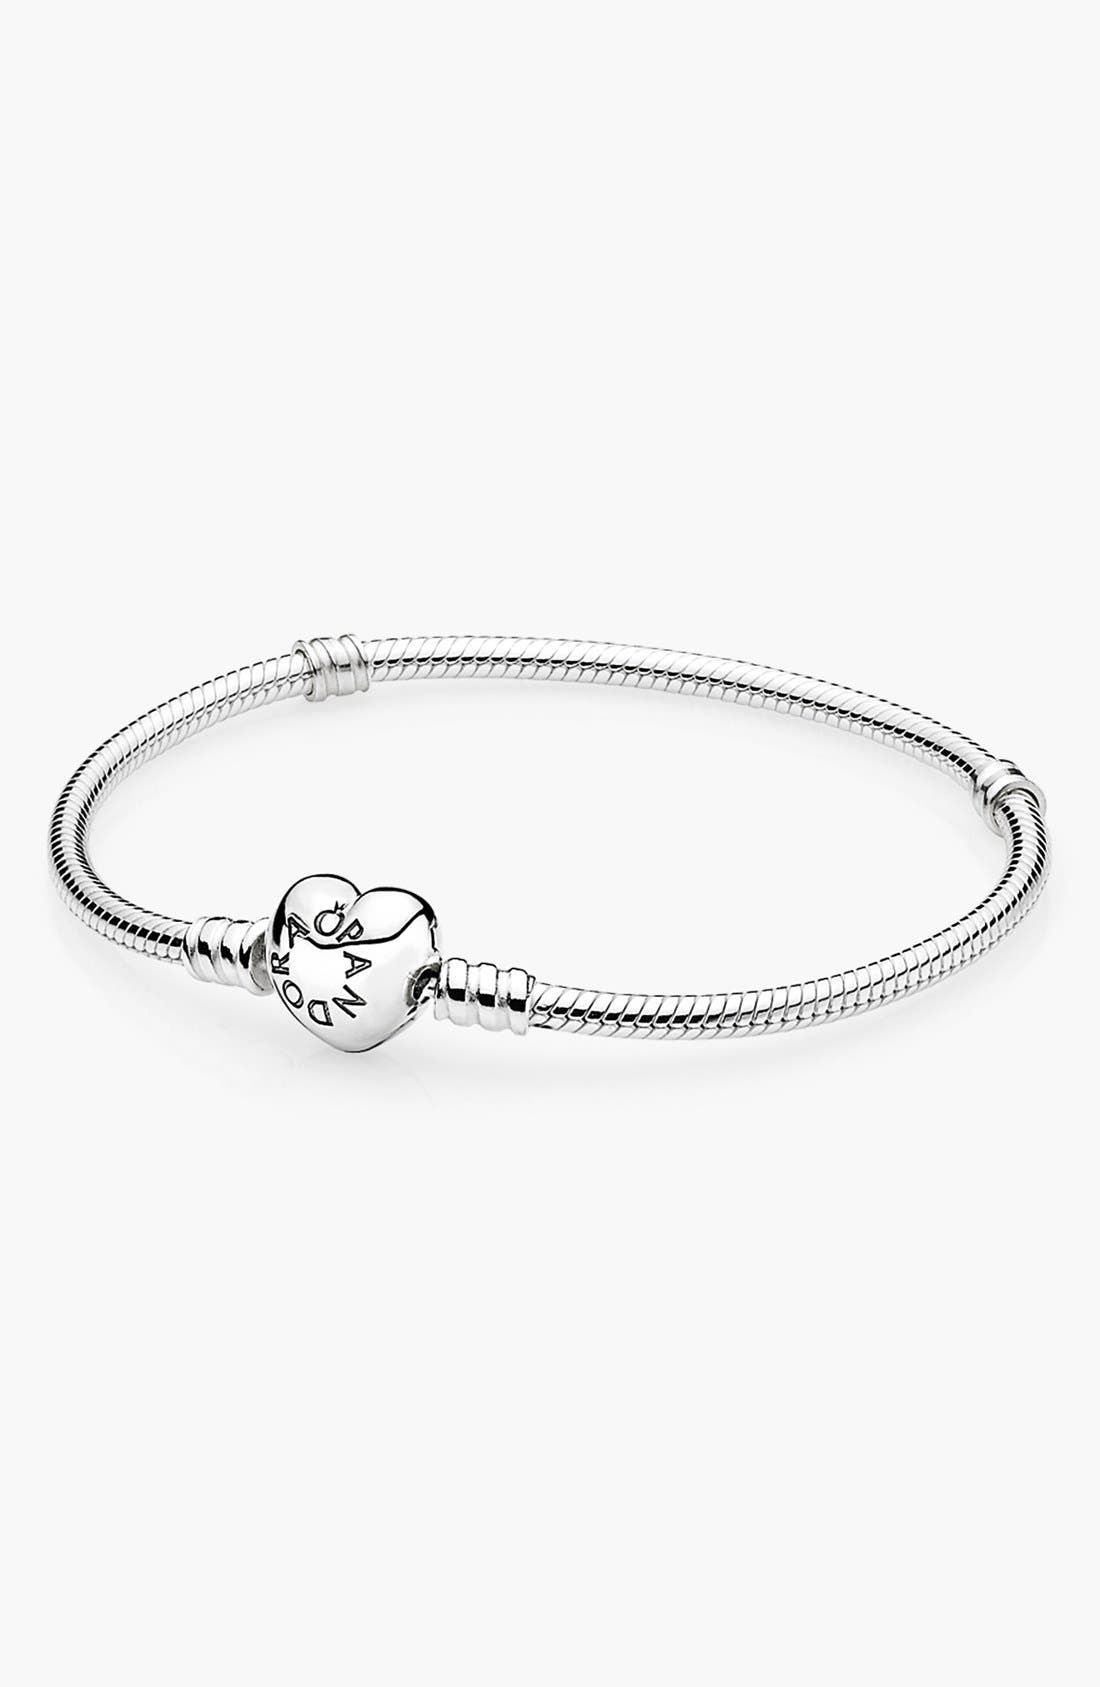 PANDORA Heart Clasp Charm Bracelet at Nordstrom, Size 17 Cm